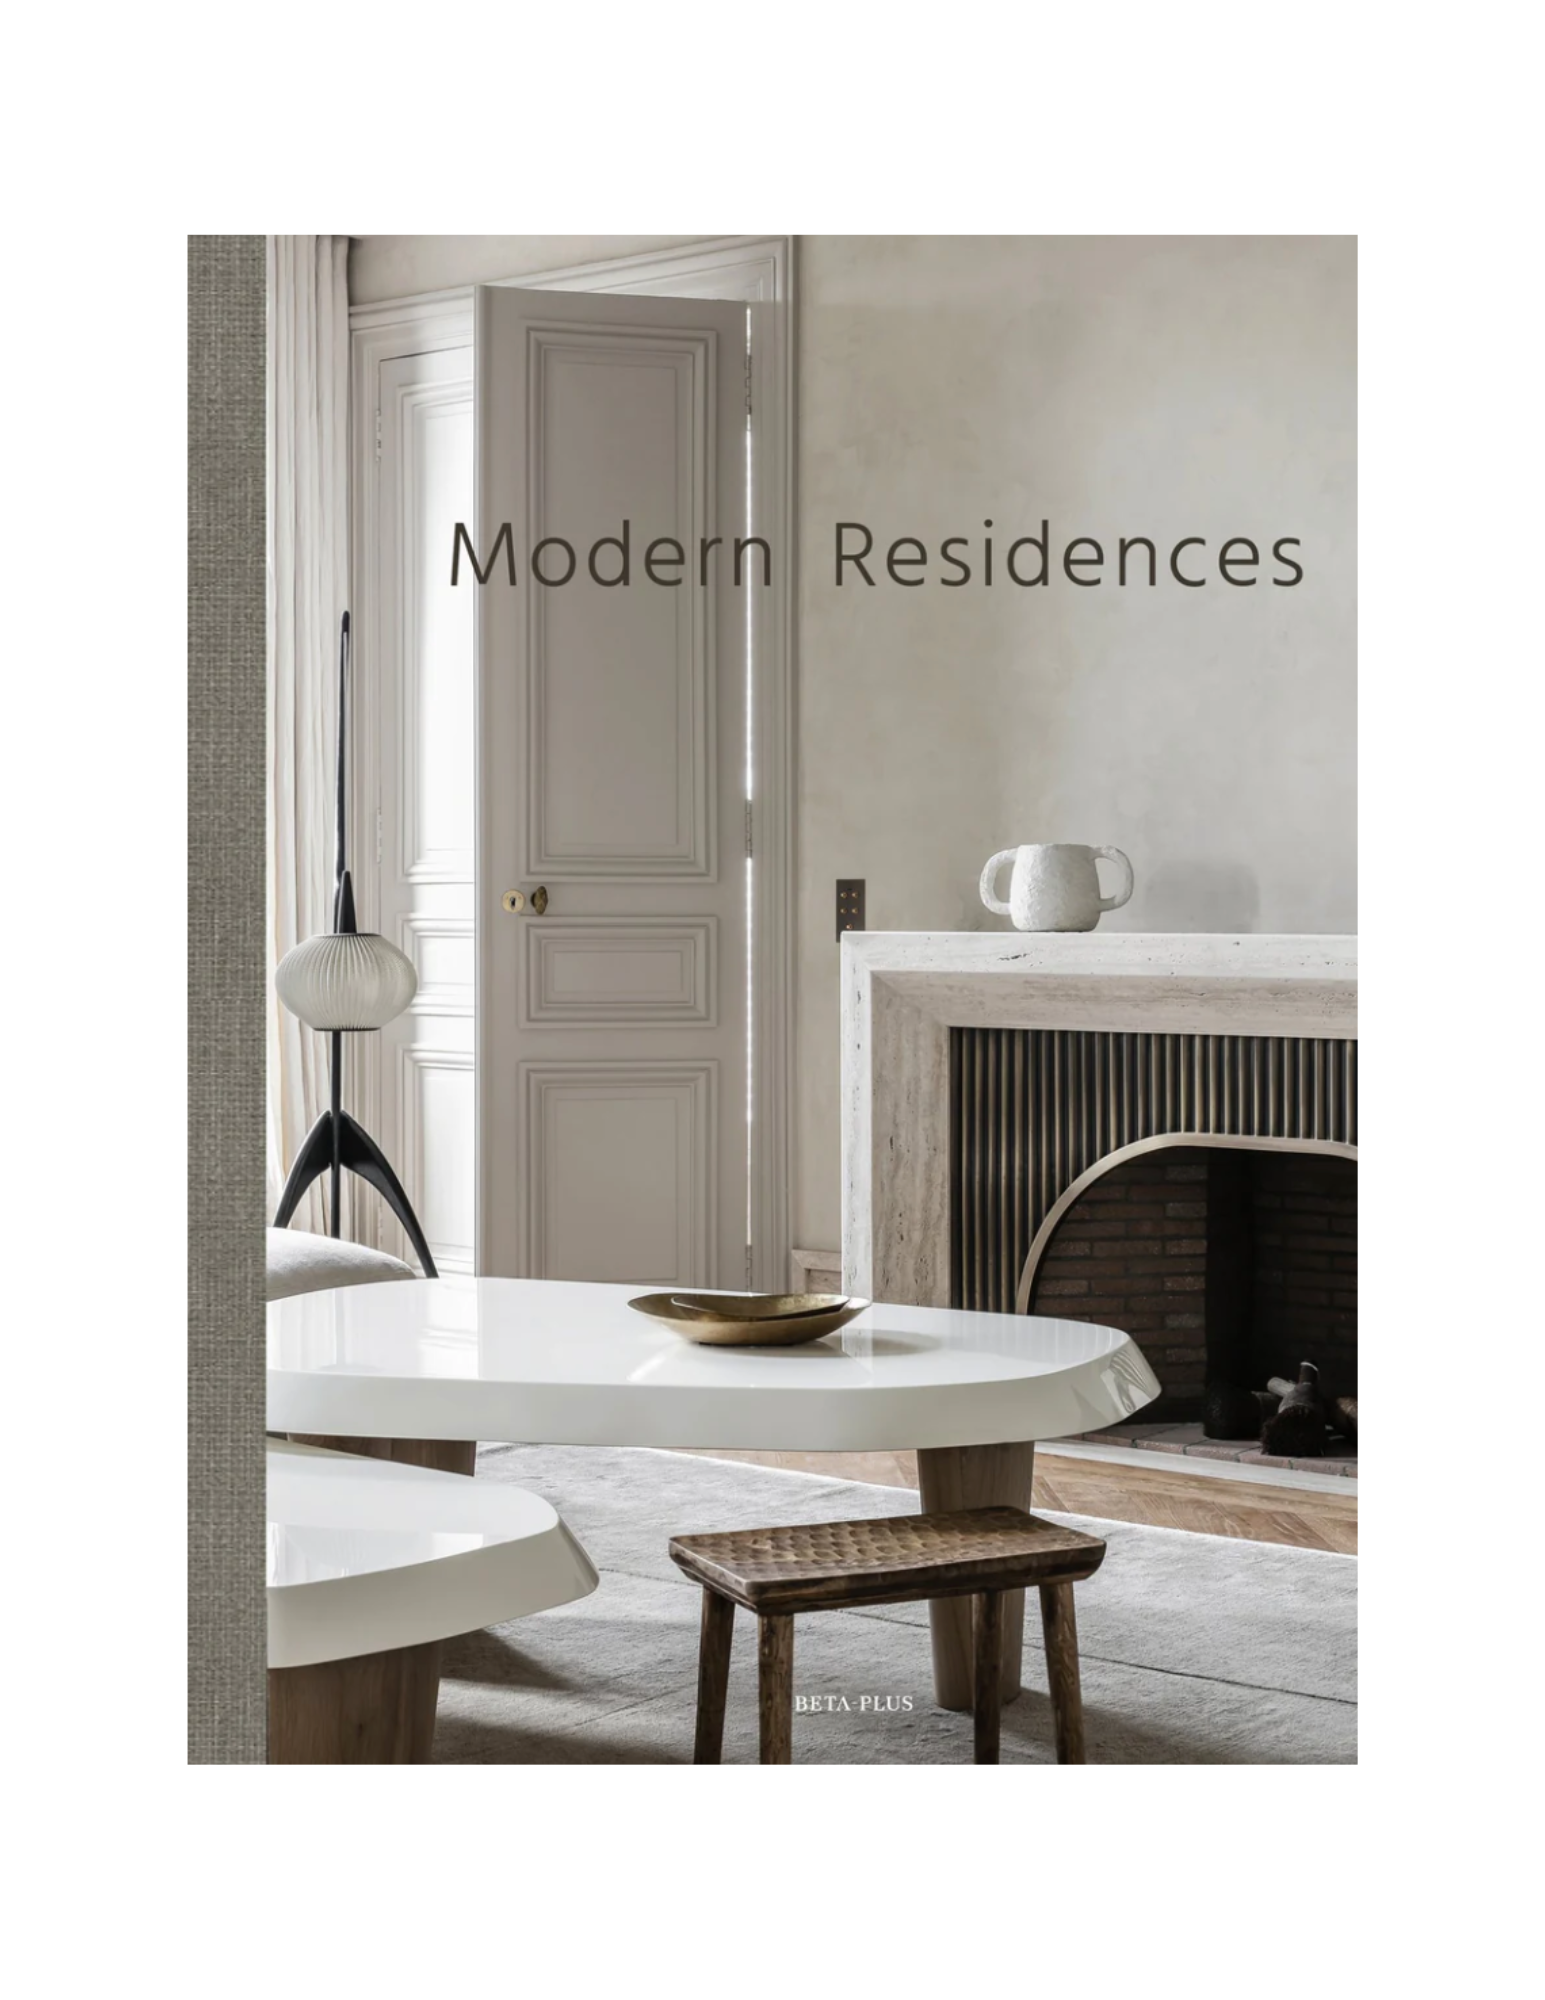 Modern Residences